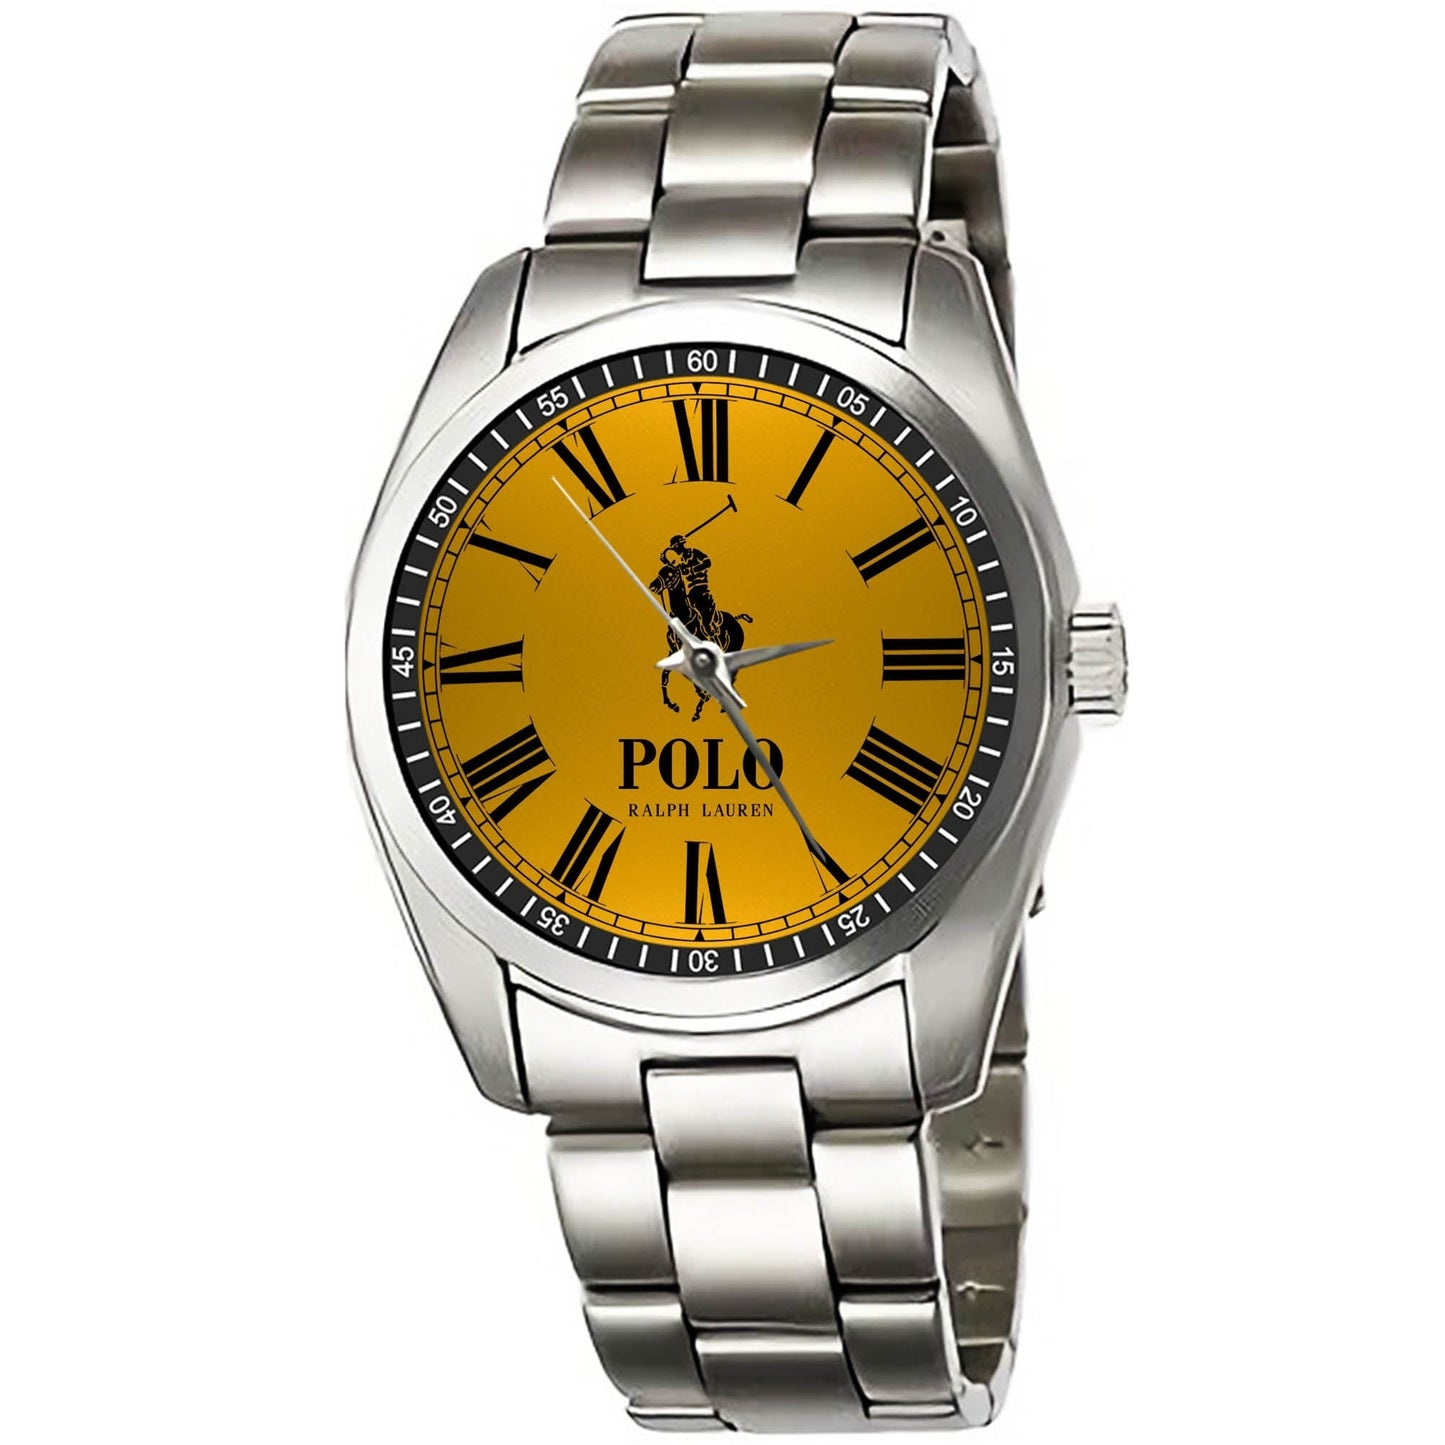 Polo Ralph Lauren Watches KP633